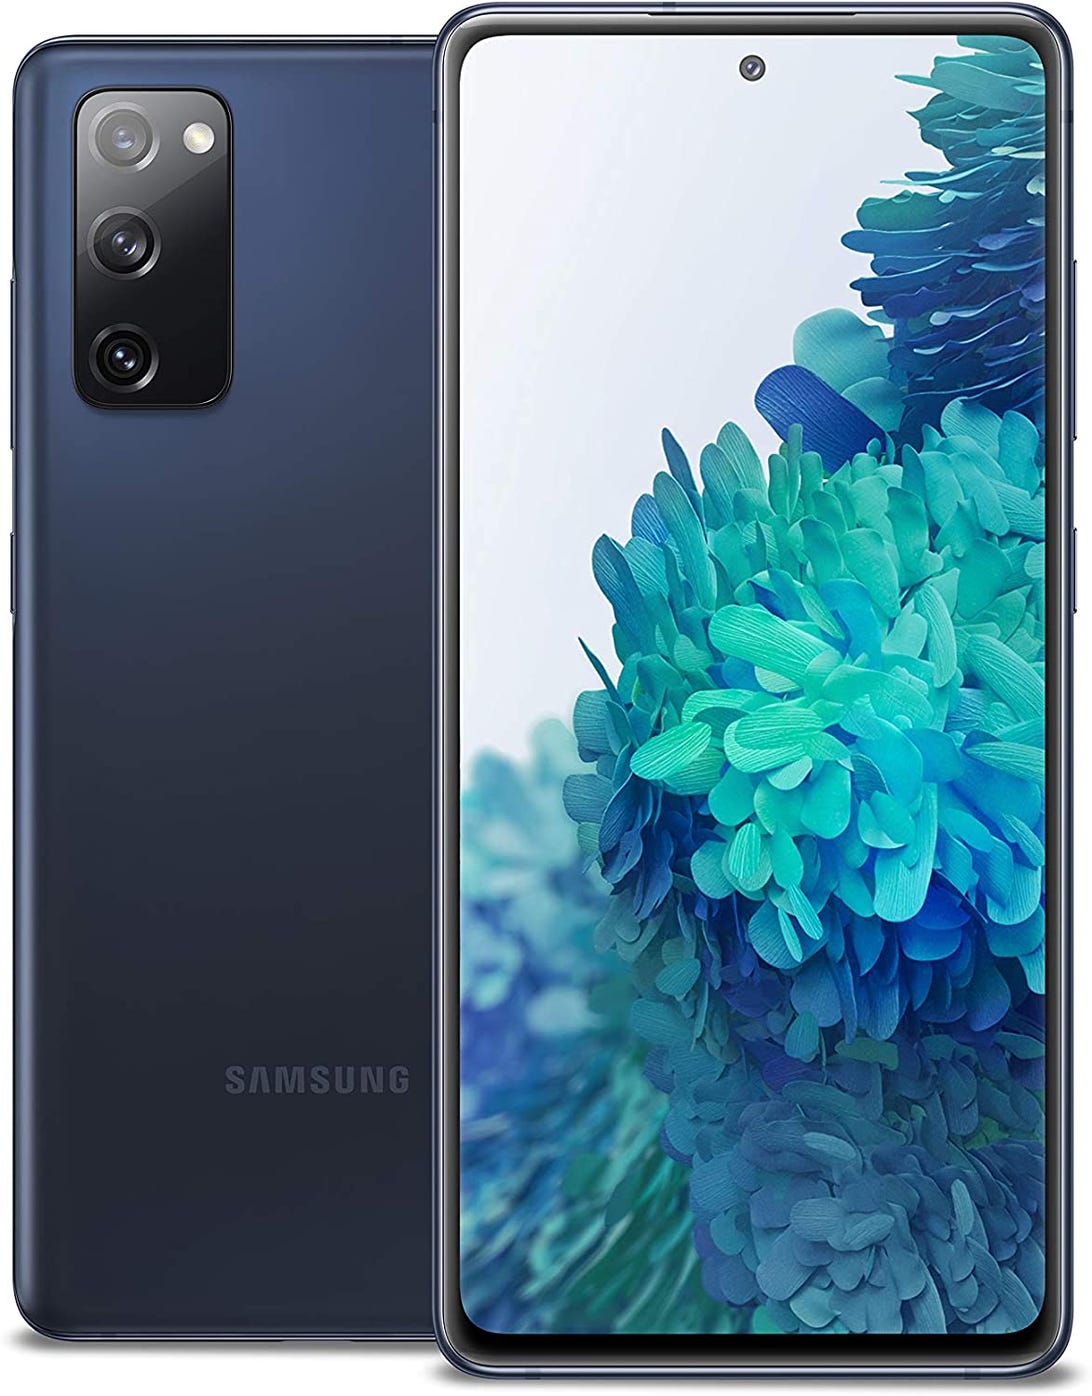 Samsung Galaxy S21 FE full specs rumored to leak